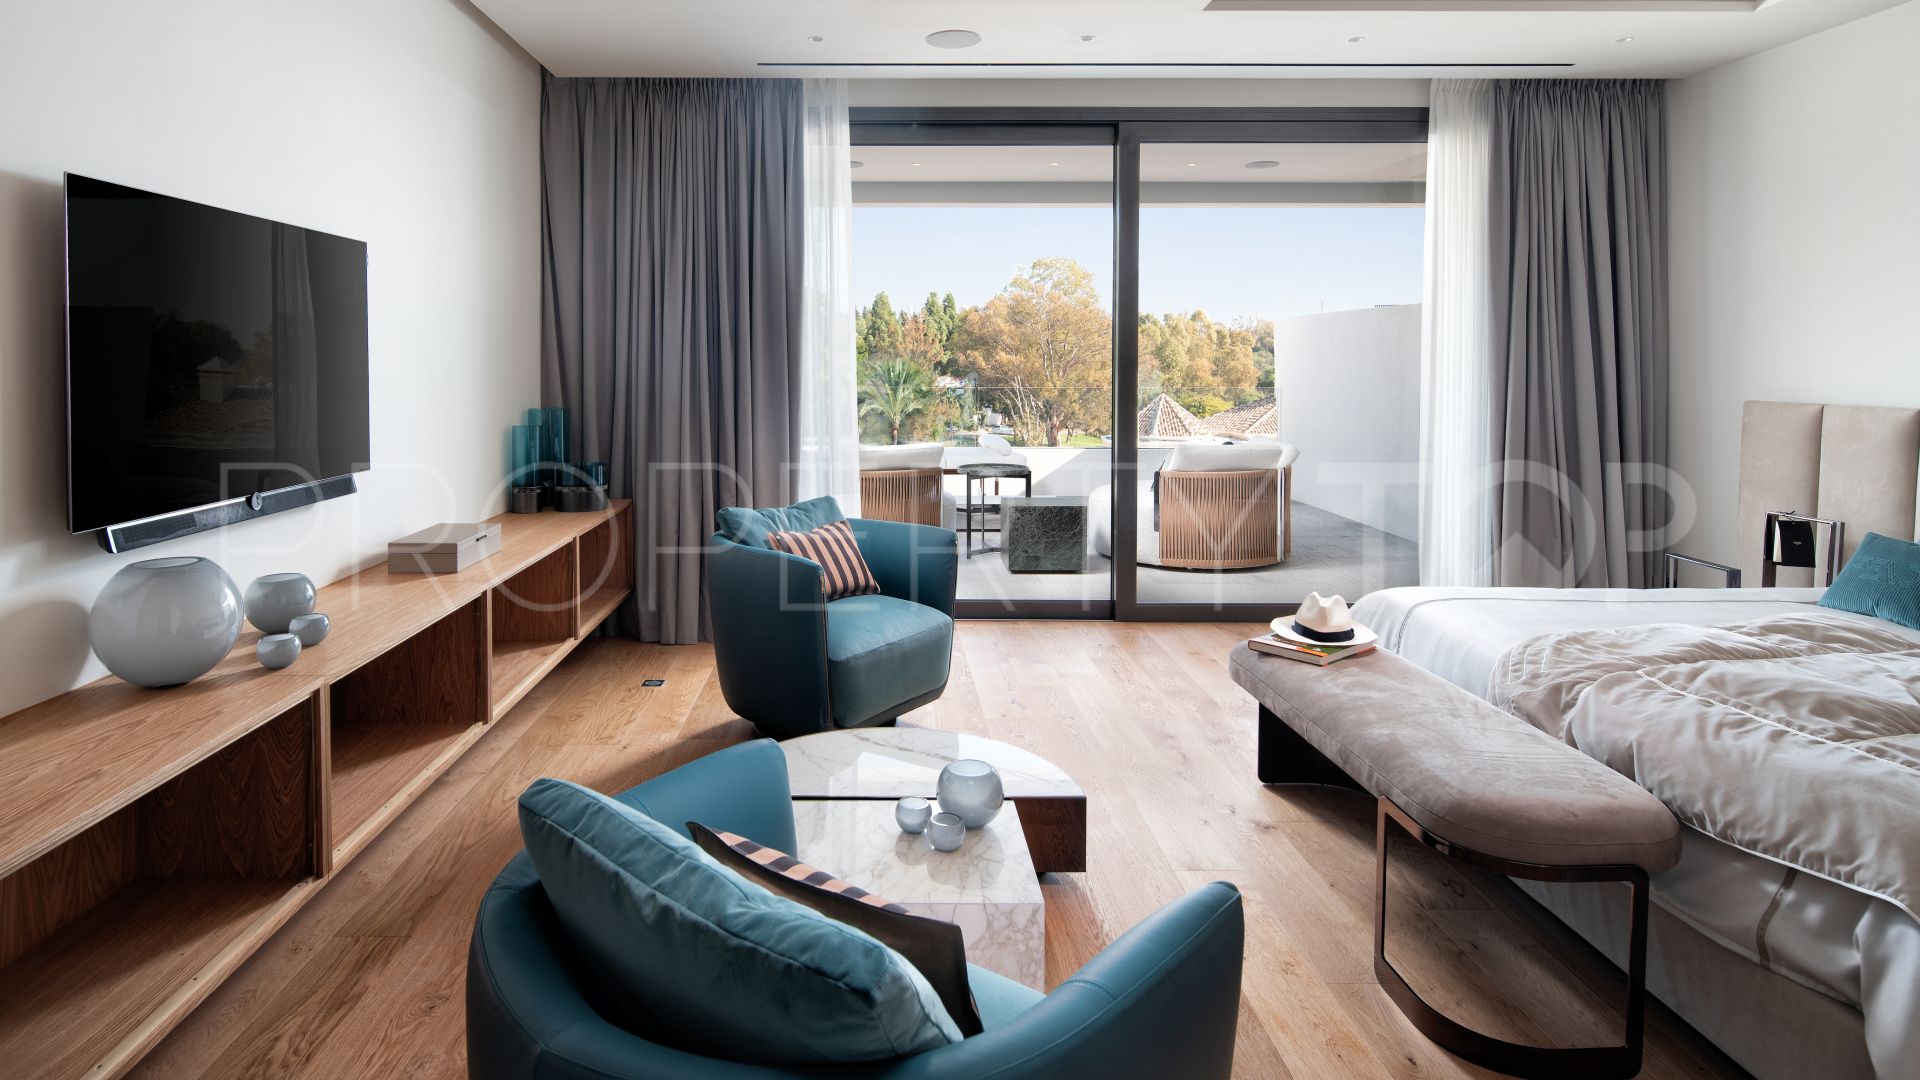 Ground floor duplex for sale in Epic Marbella with 4 bedrooms